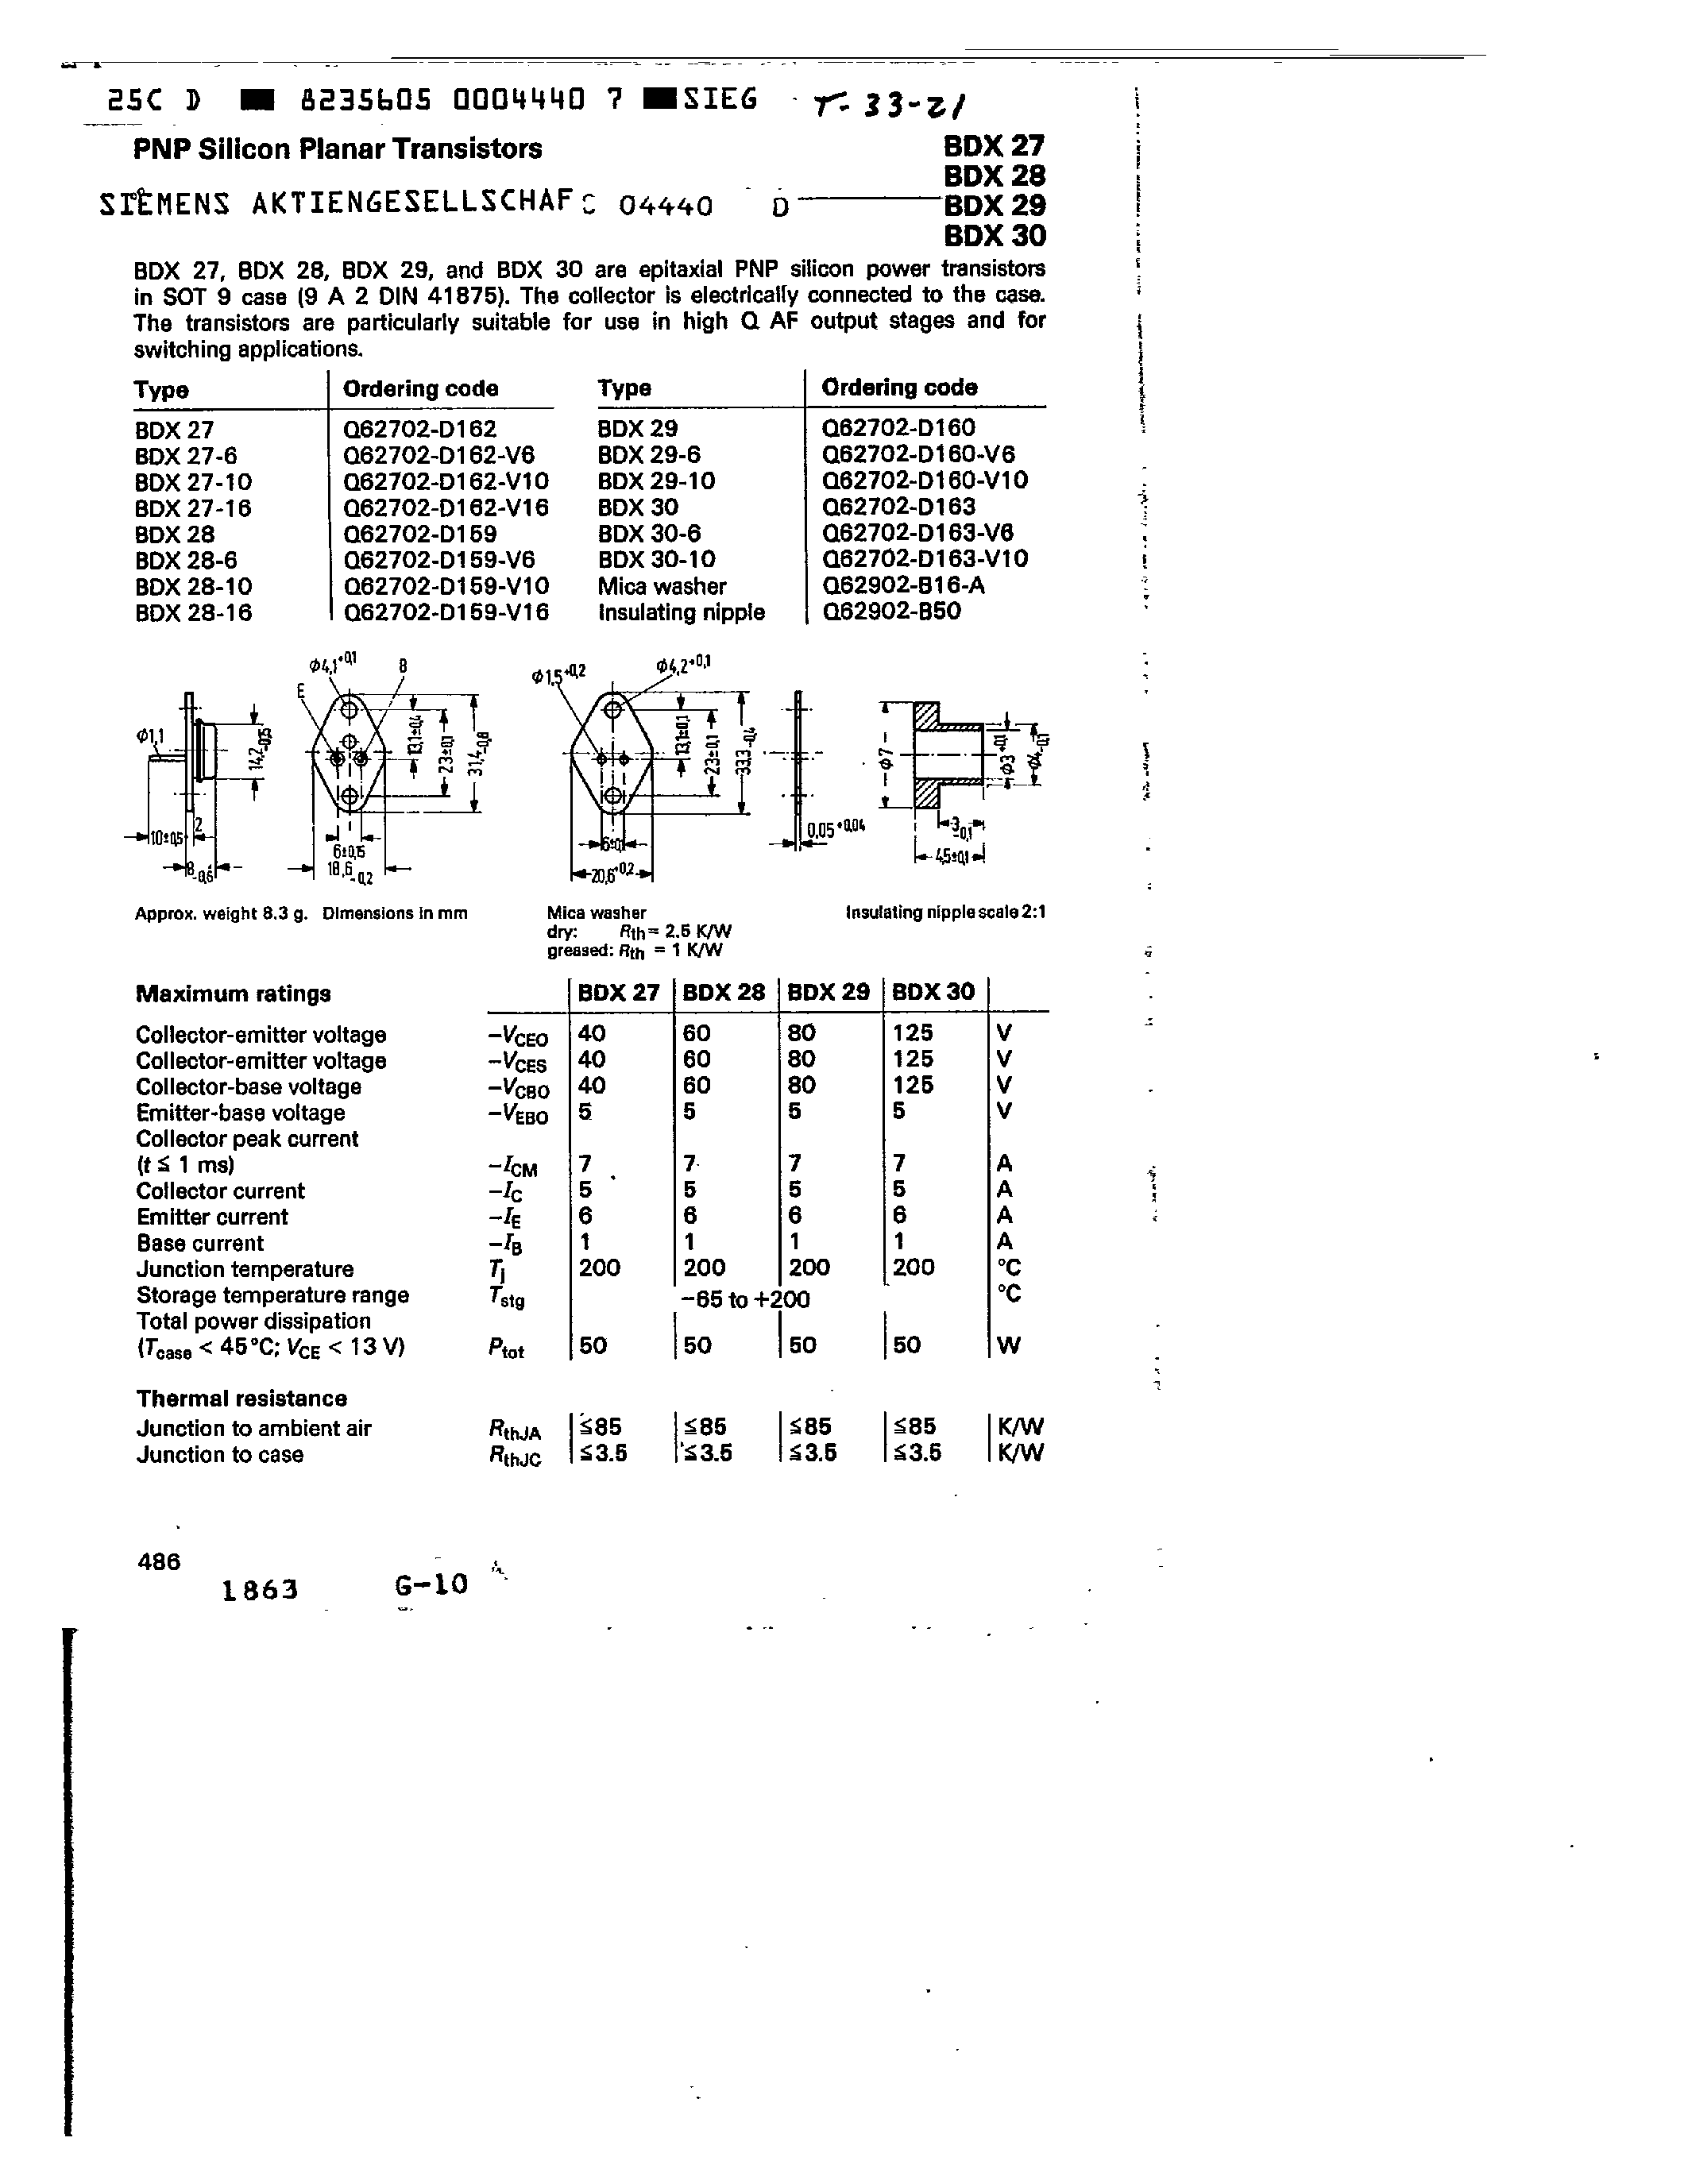 Datasheet BDX29-6 - PNP SILICON PLANAR TRANSISTORS page 1